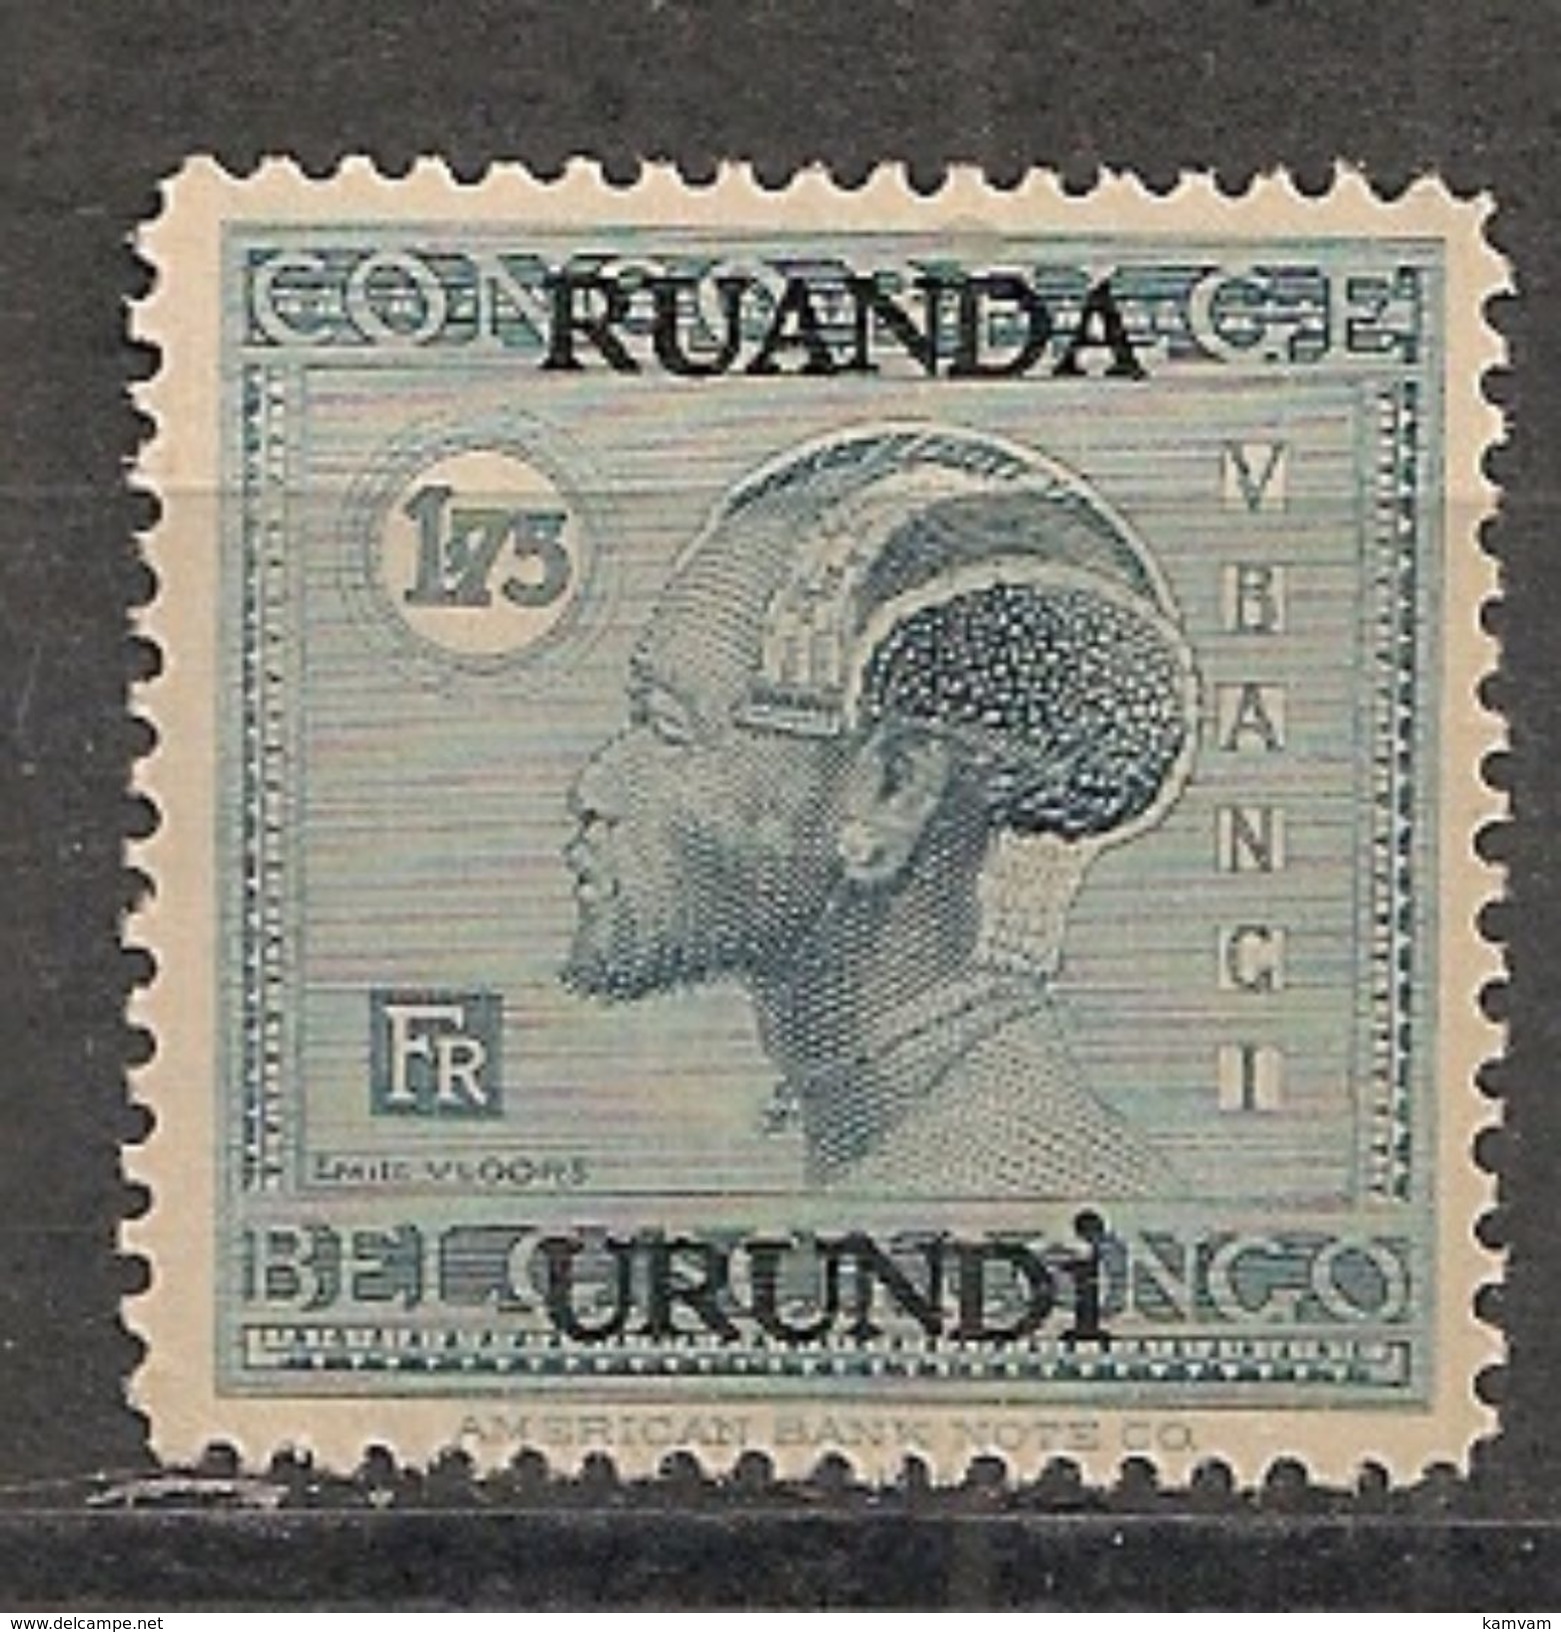 CONGO RUANDA URUNDI 75 1f75 MNH NSCH ** - Unused Stamps